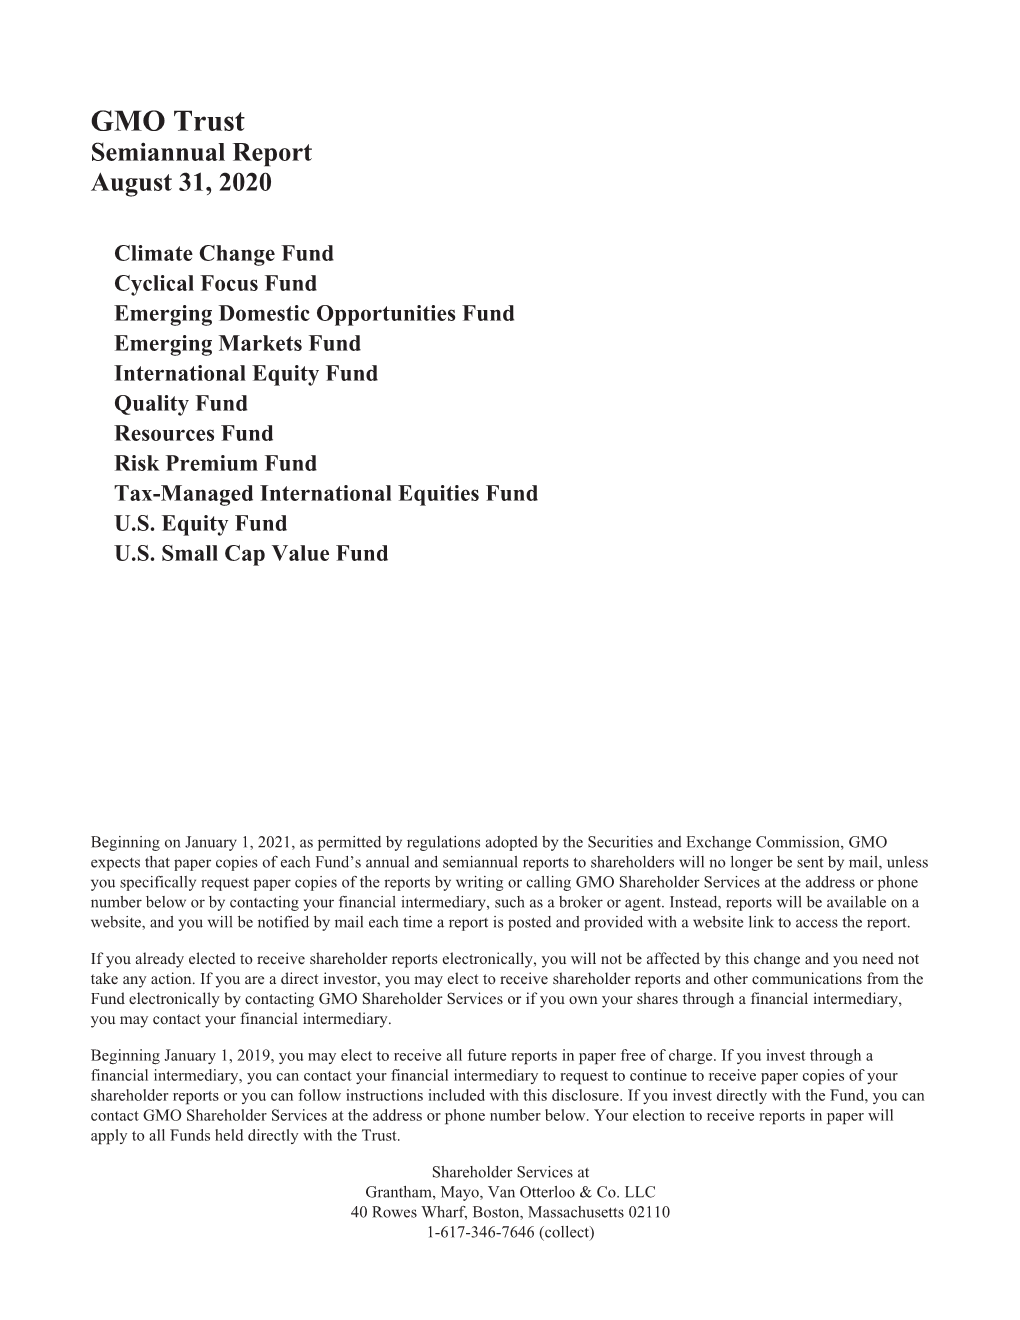 GMO Trust Semiannual Report August 31, 2020